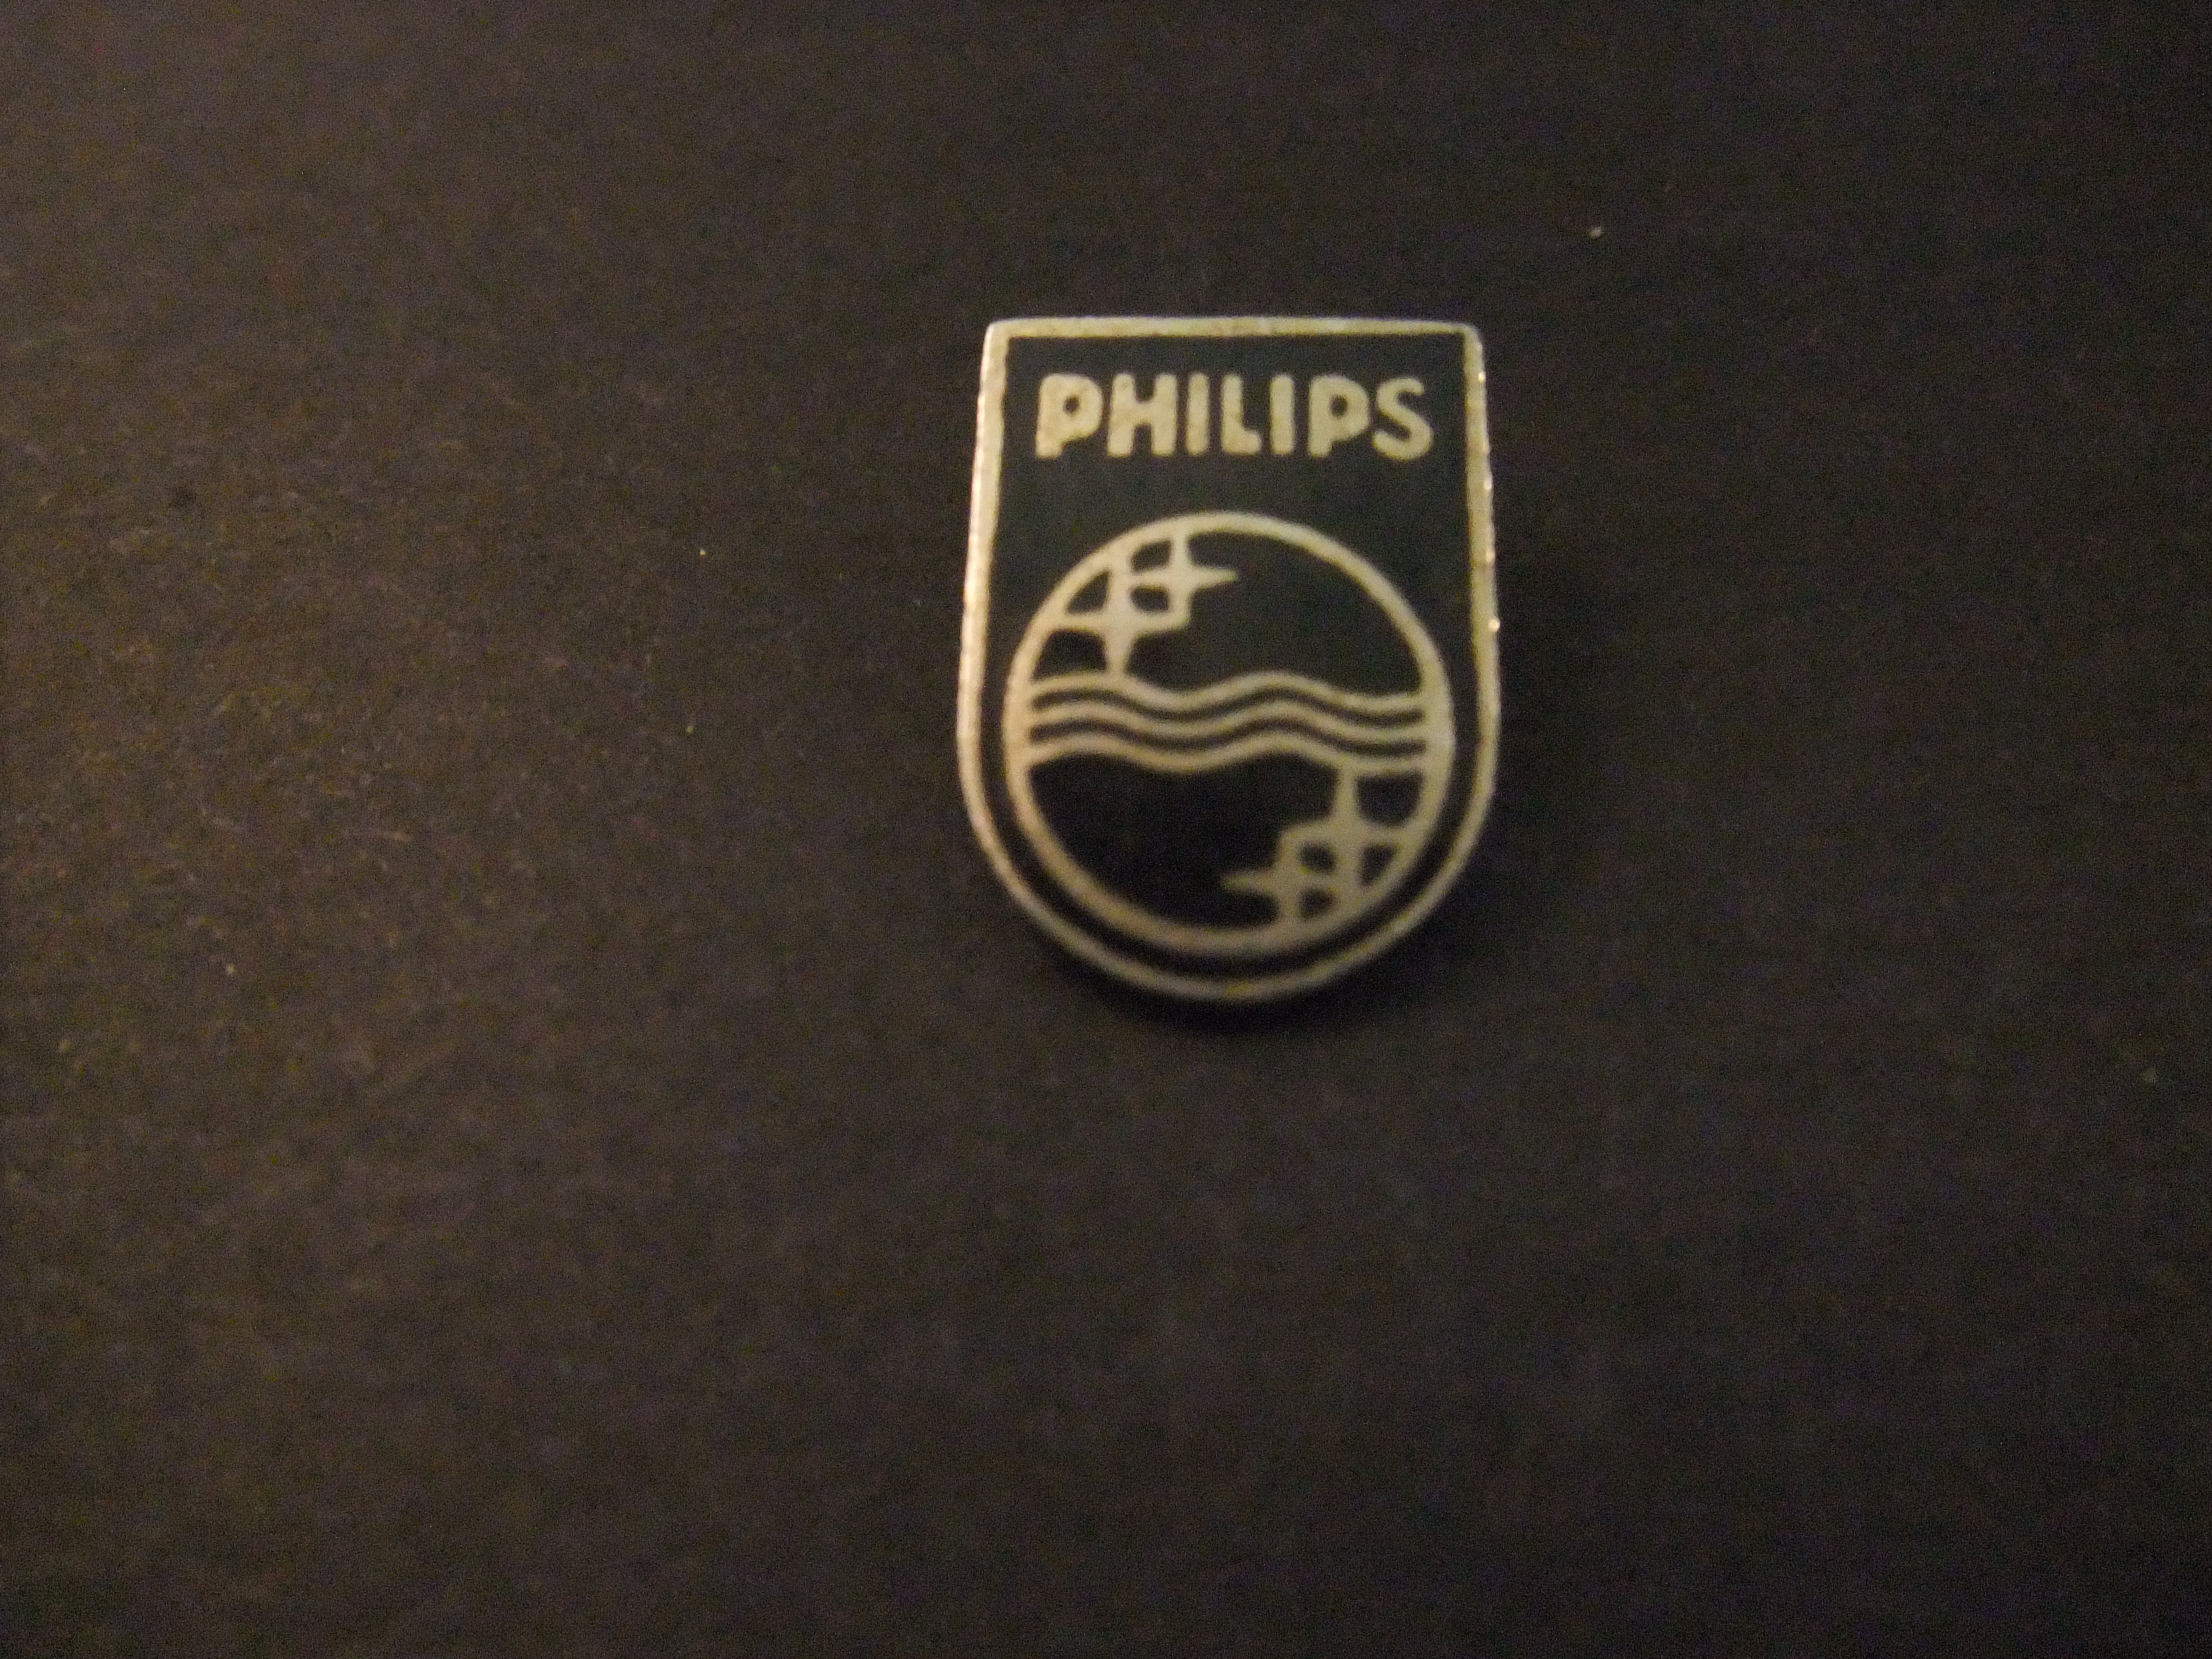 Philips Eindhoven electronica logo zwart